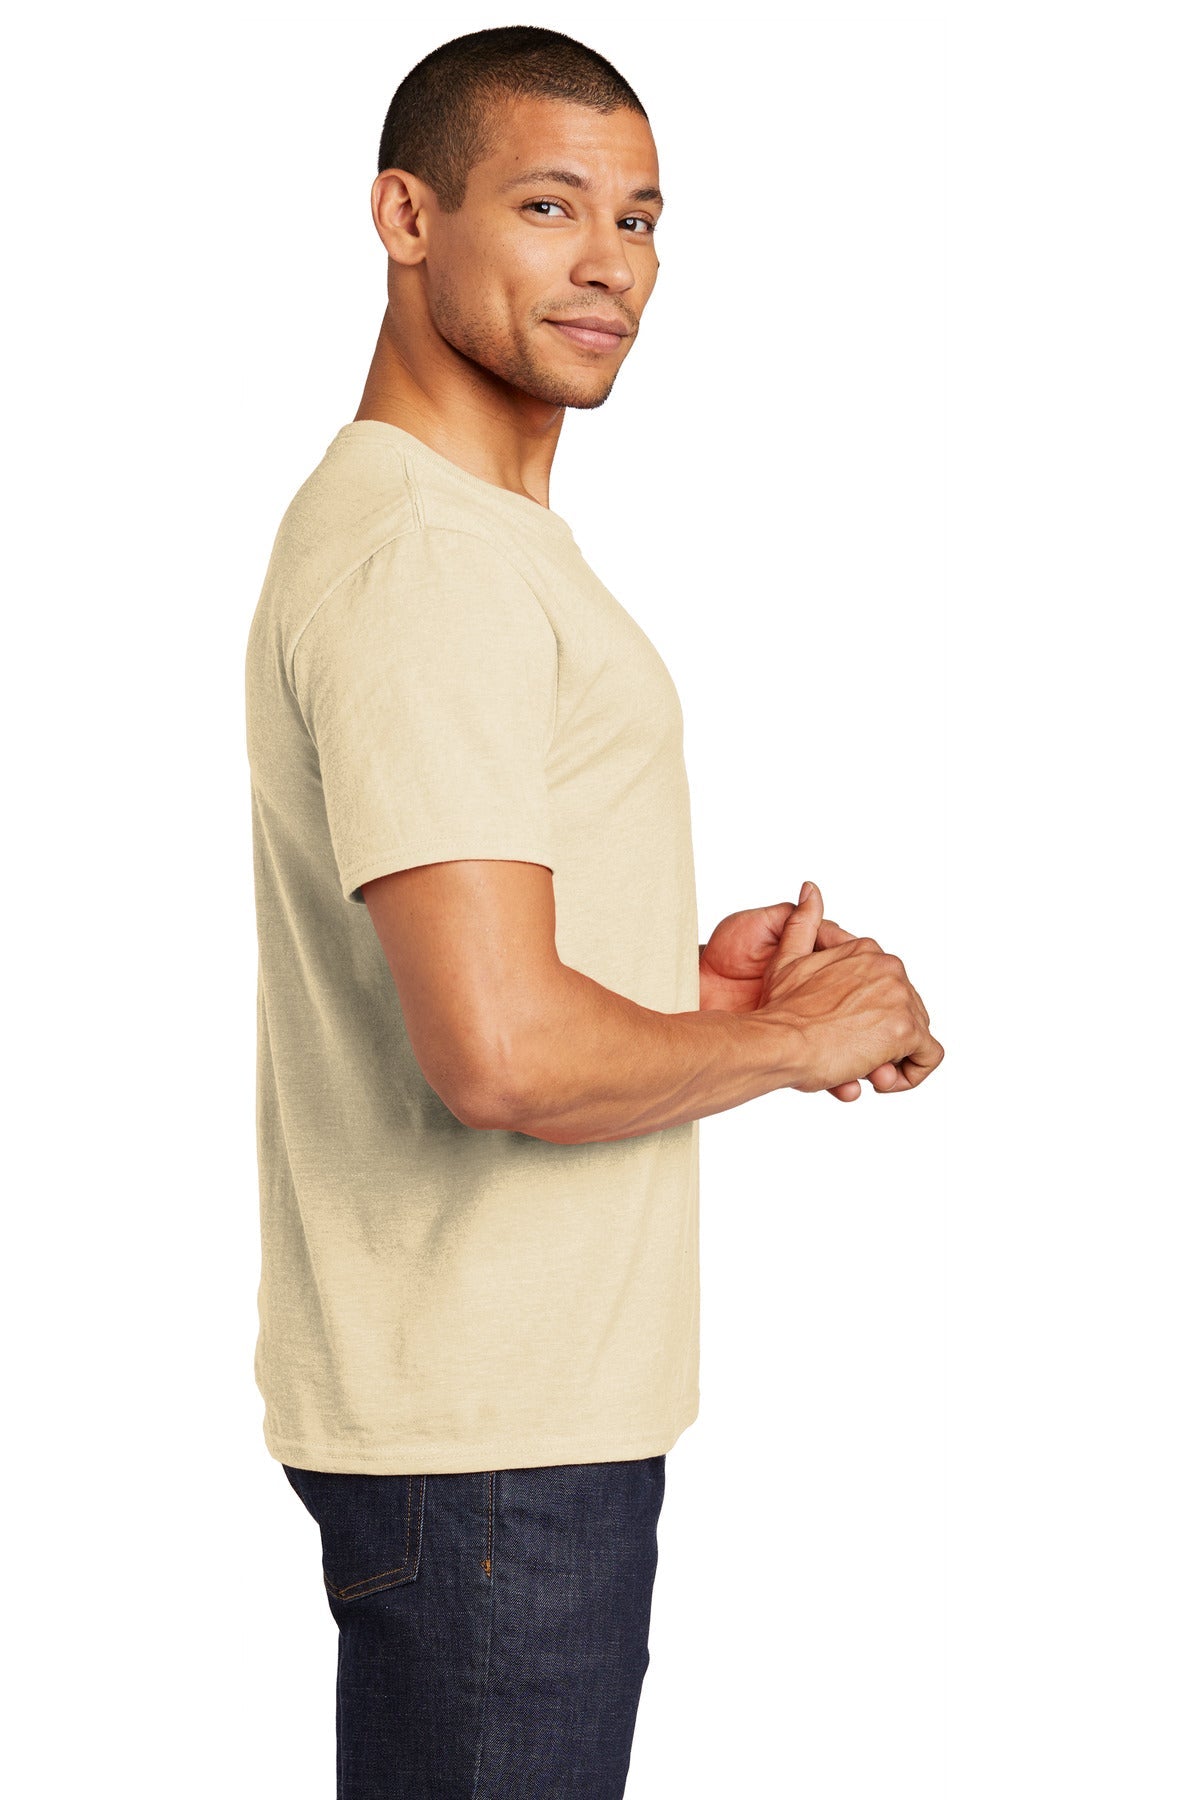 JERZEES® Premium Blend Ring Spun T-Shirt 560M [Sweet Cream Heather] - DFW Impression